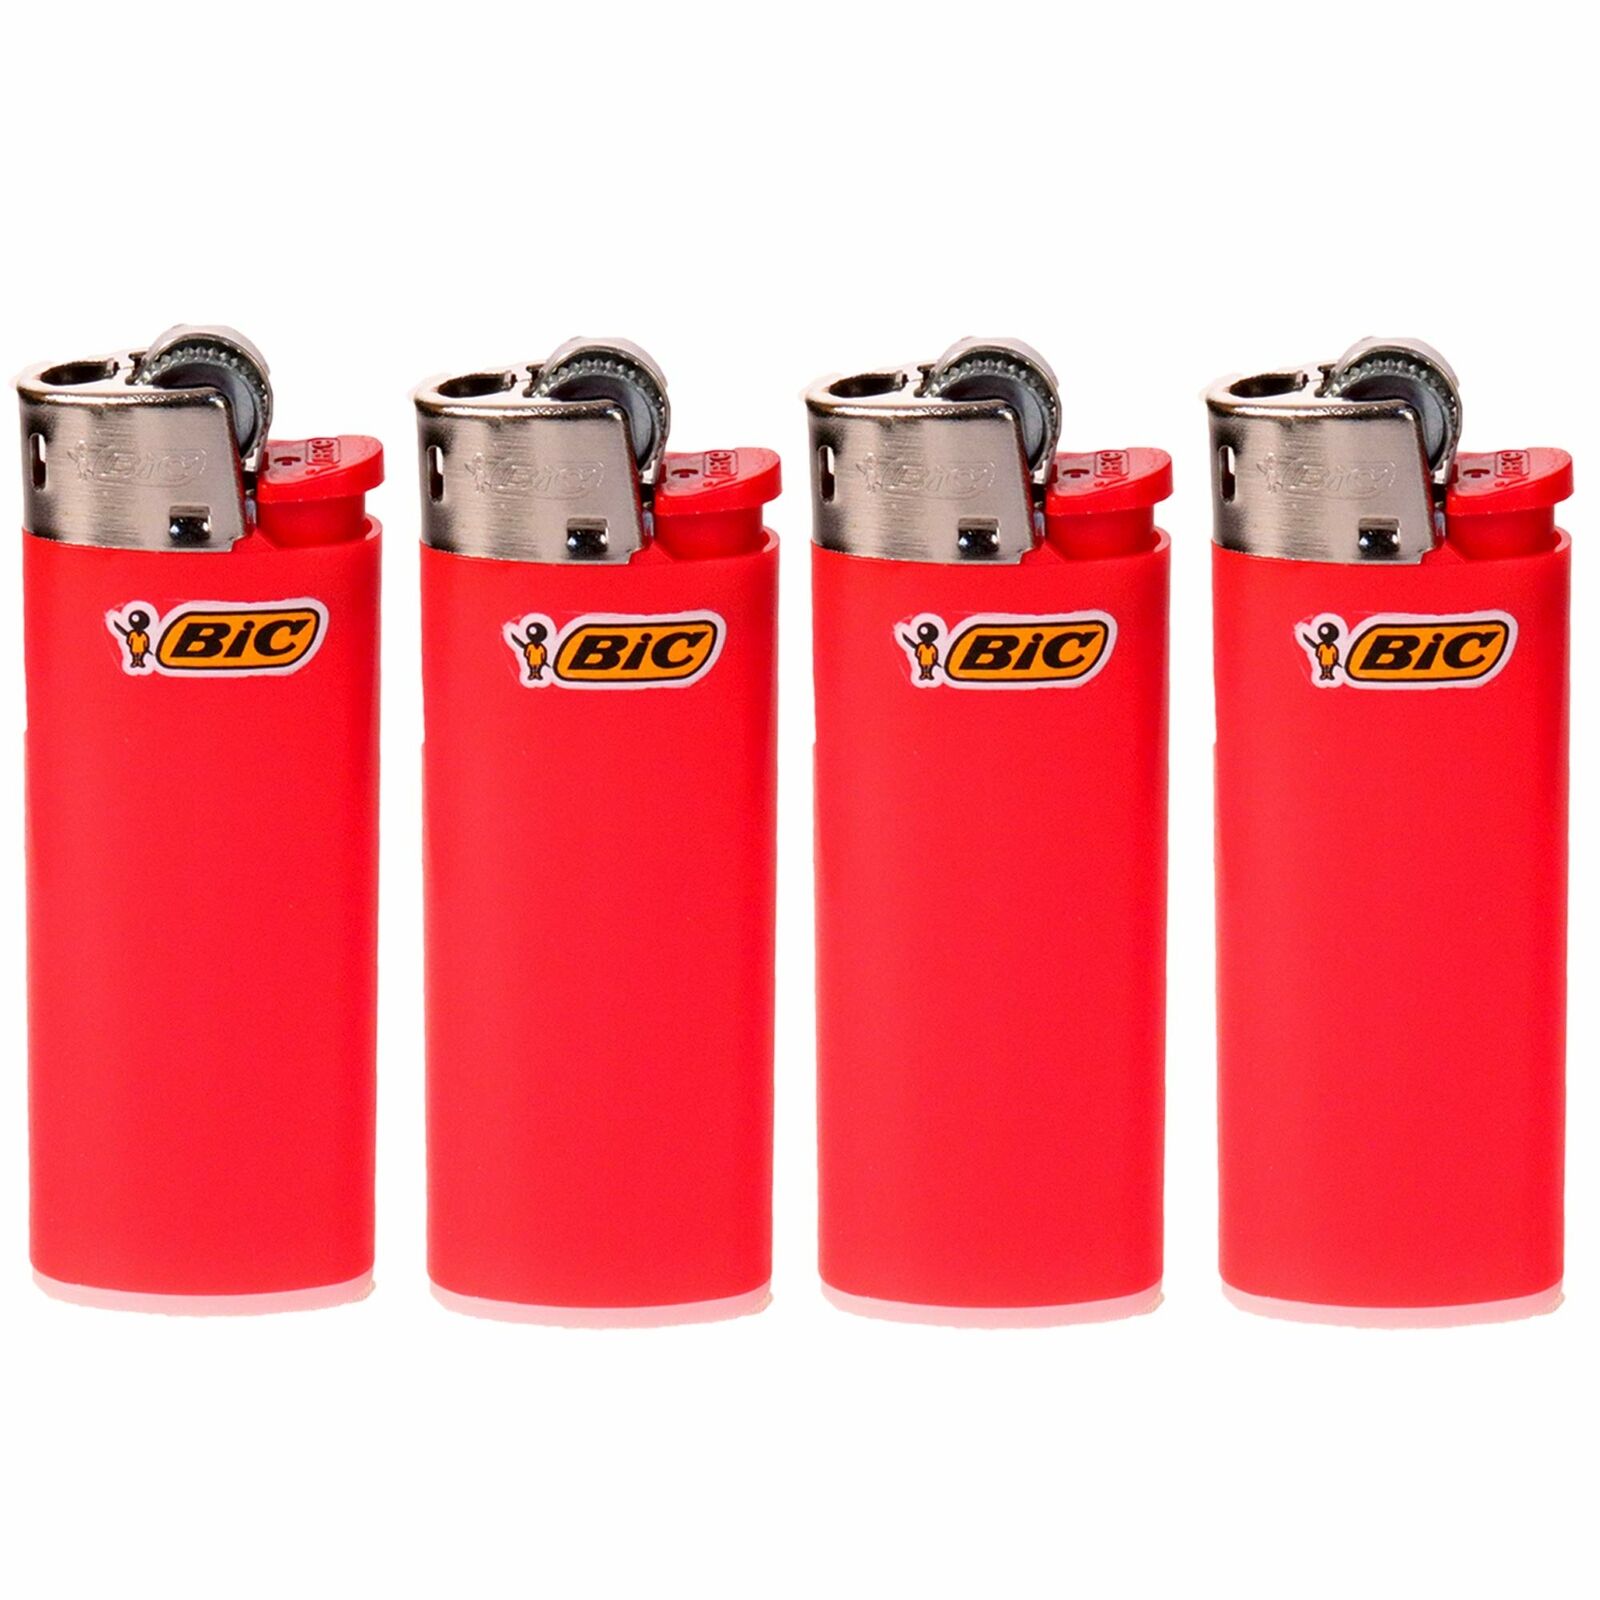 4 - Red Mini Bic Lighters 